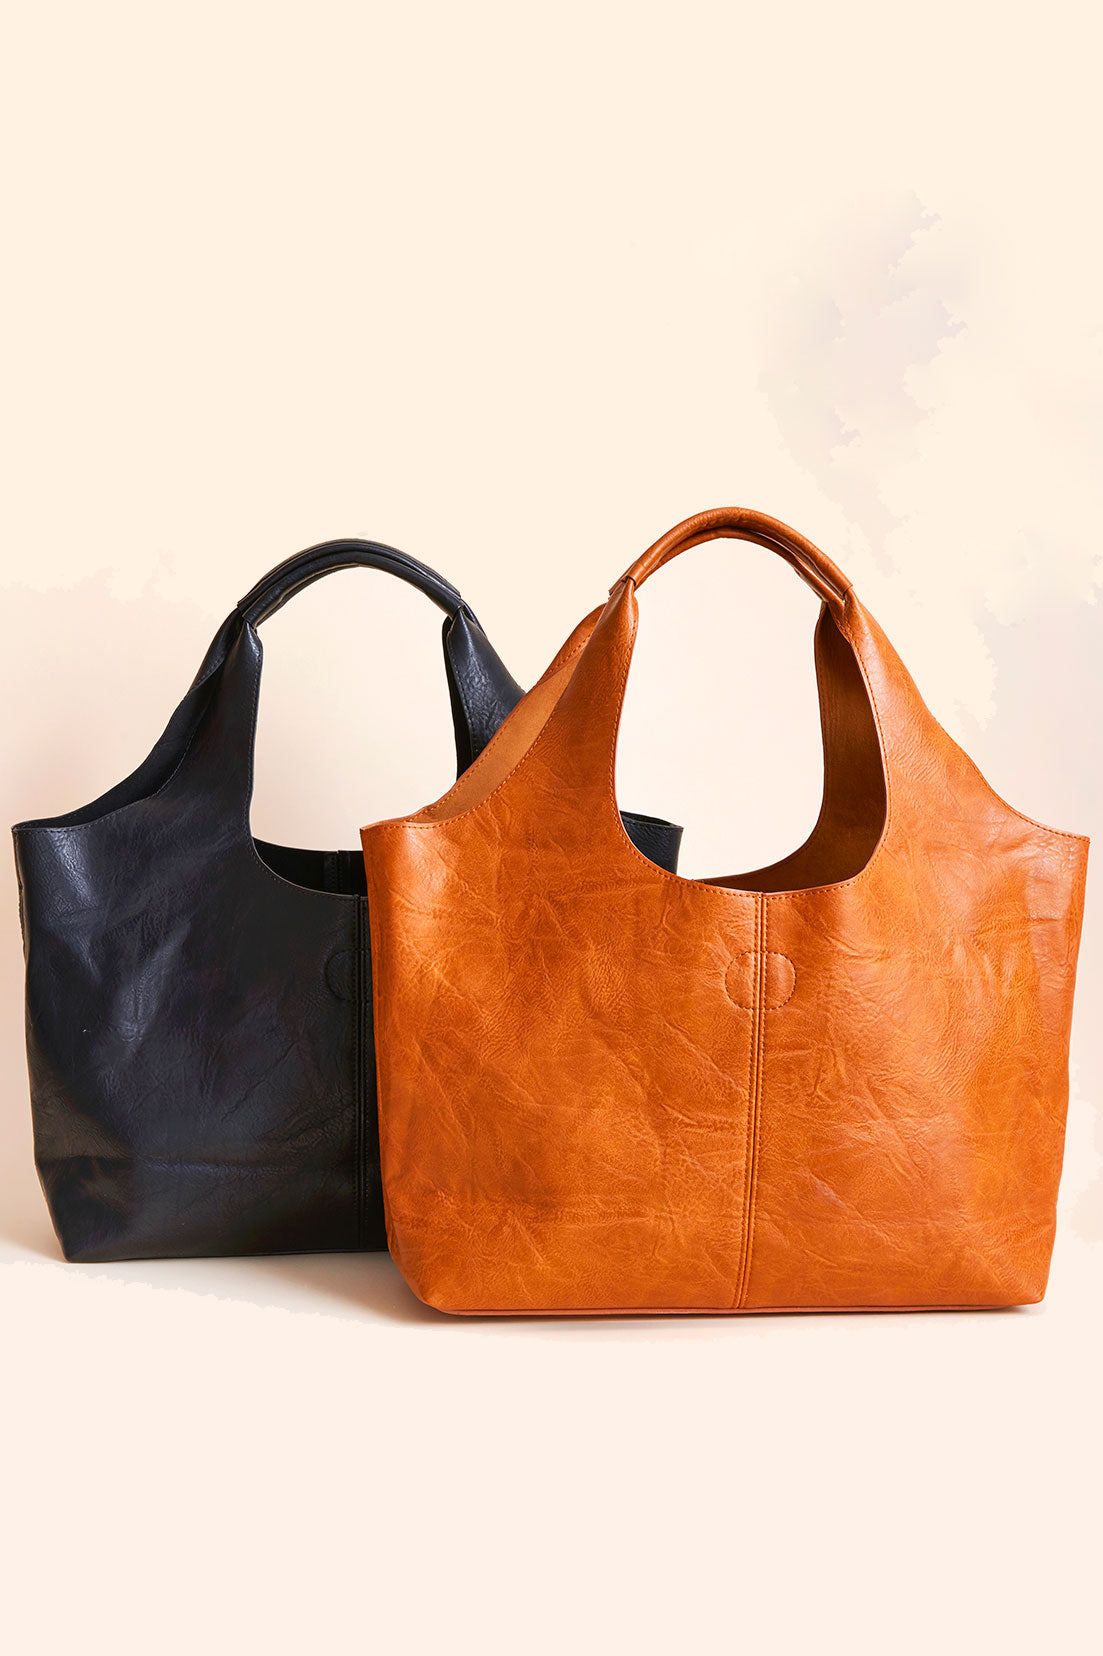 Women's Hobo Bags, Exclusive Styles